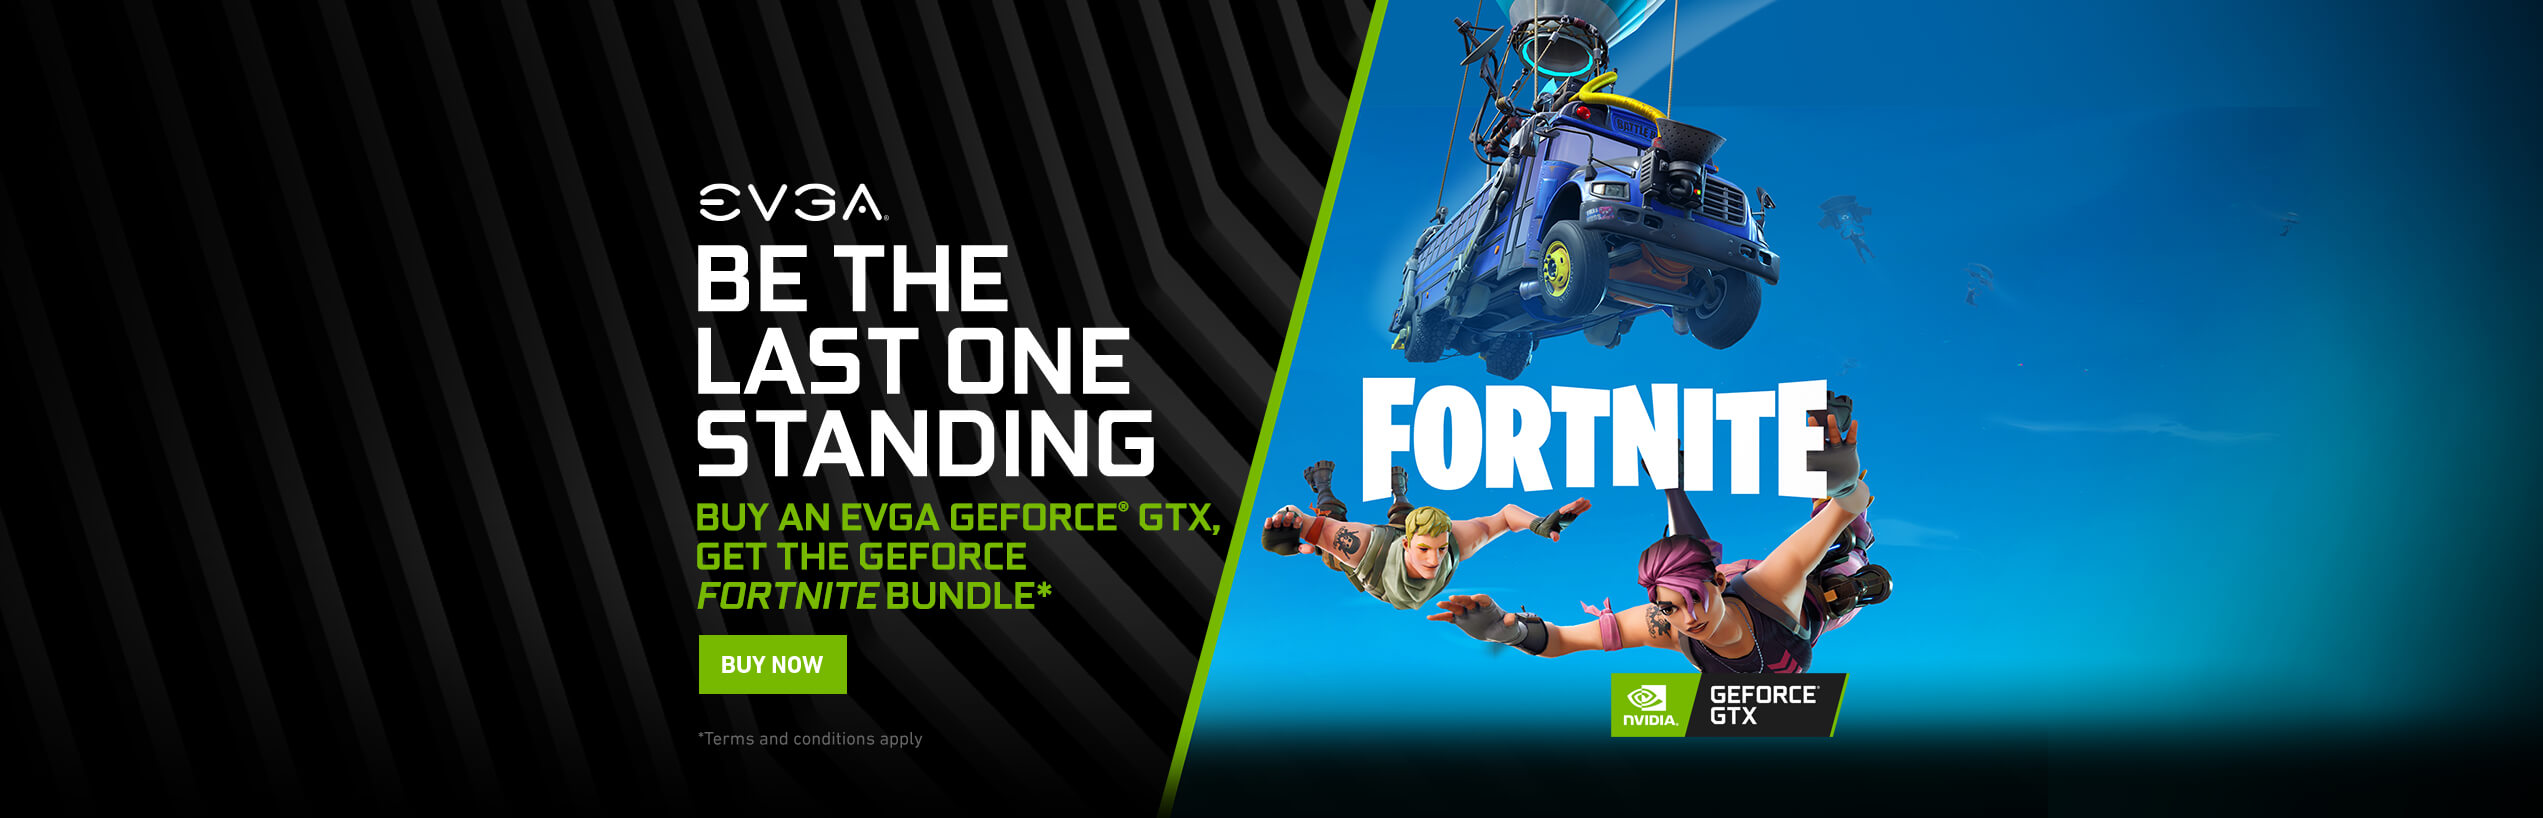 Buy An EVGA GeForce GTX, Get The GeForce Fortnite Bundle